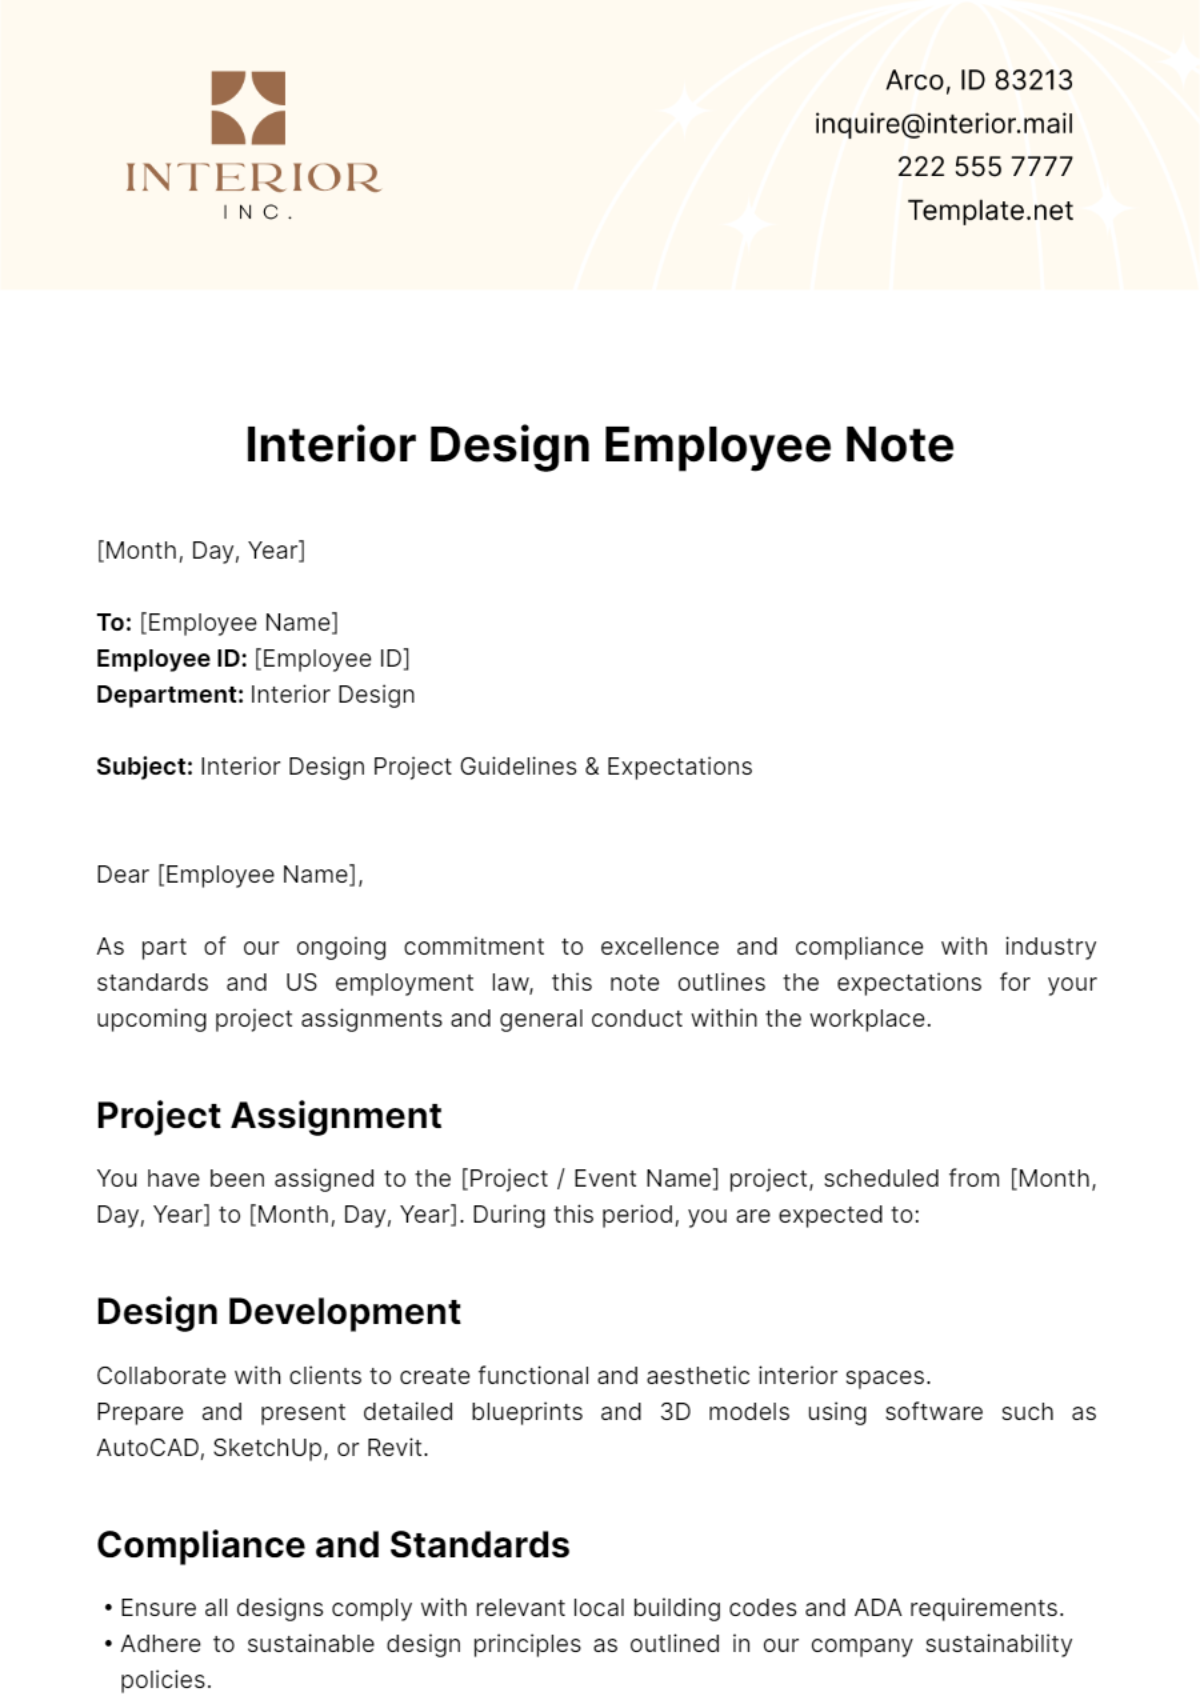 Interior Design Employee Note Template